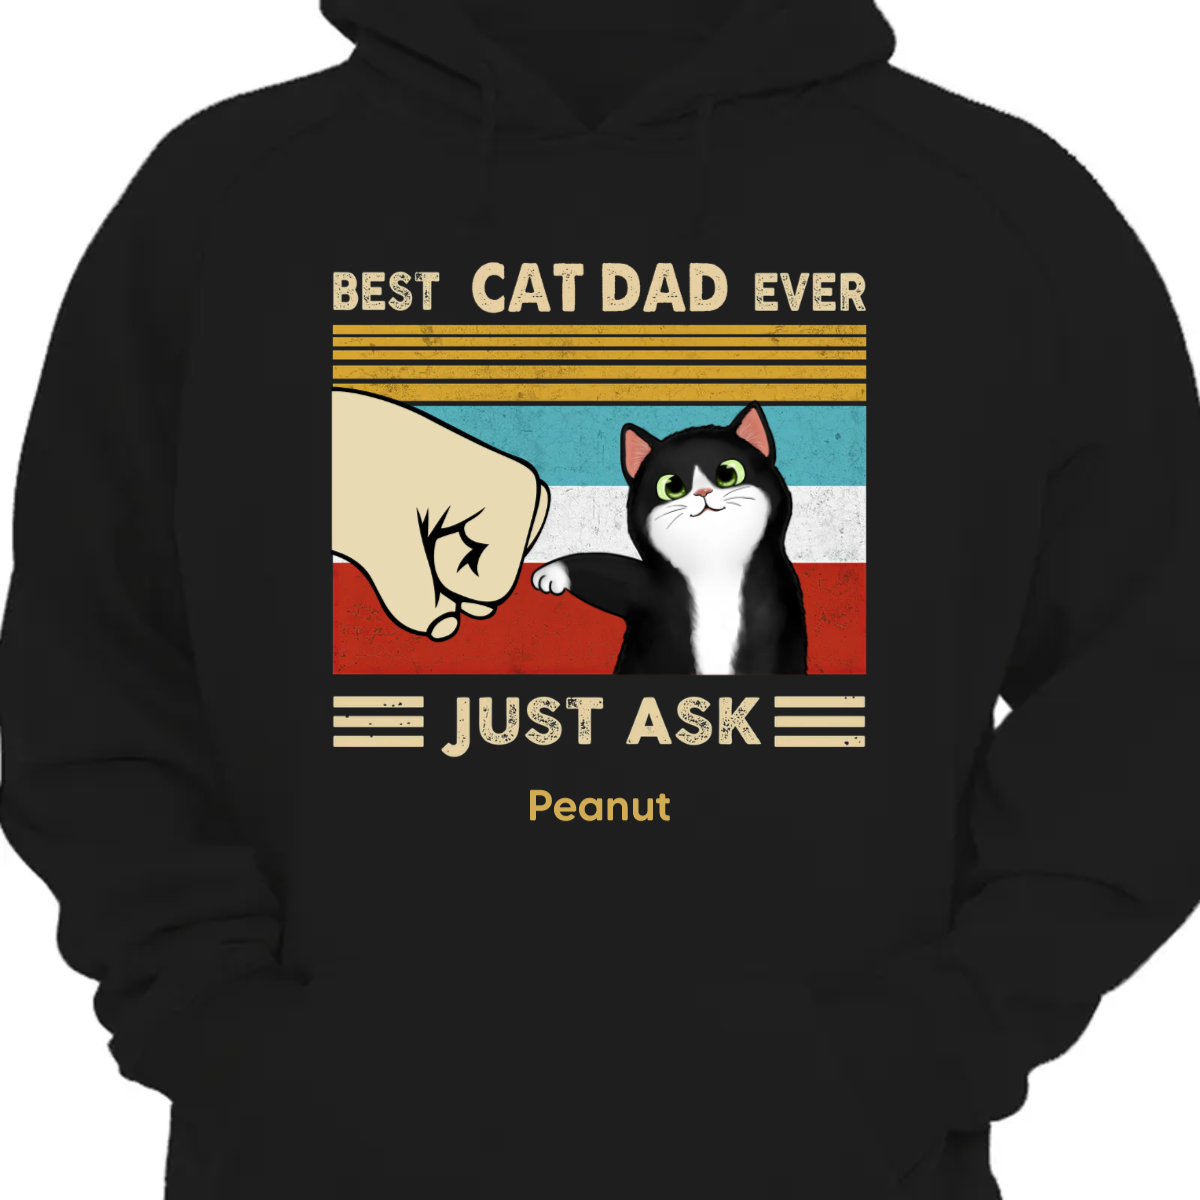 Best Cat Mum/Dad Fluffy Cat Personalized Custom Hoodie Sweatshirt